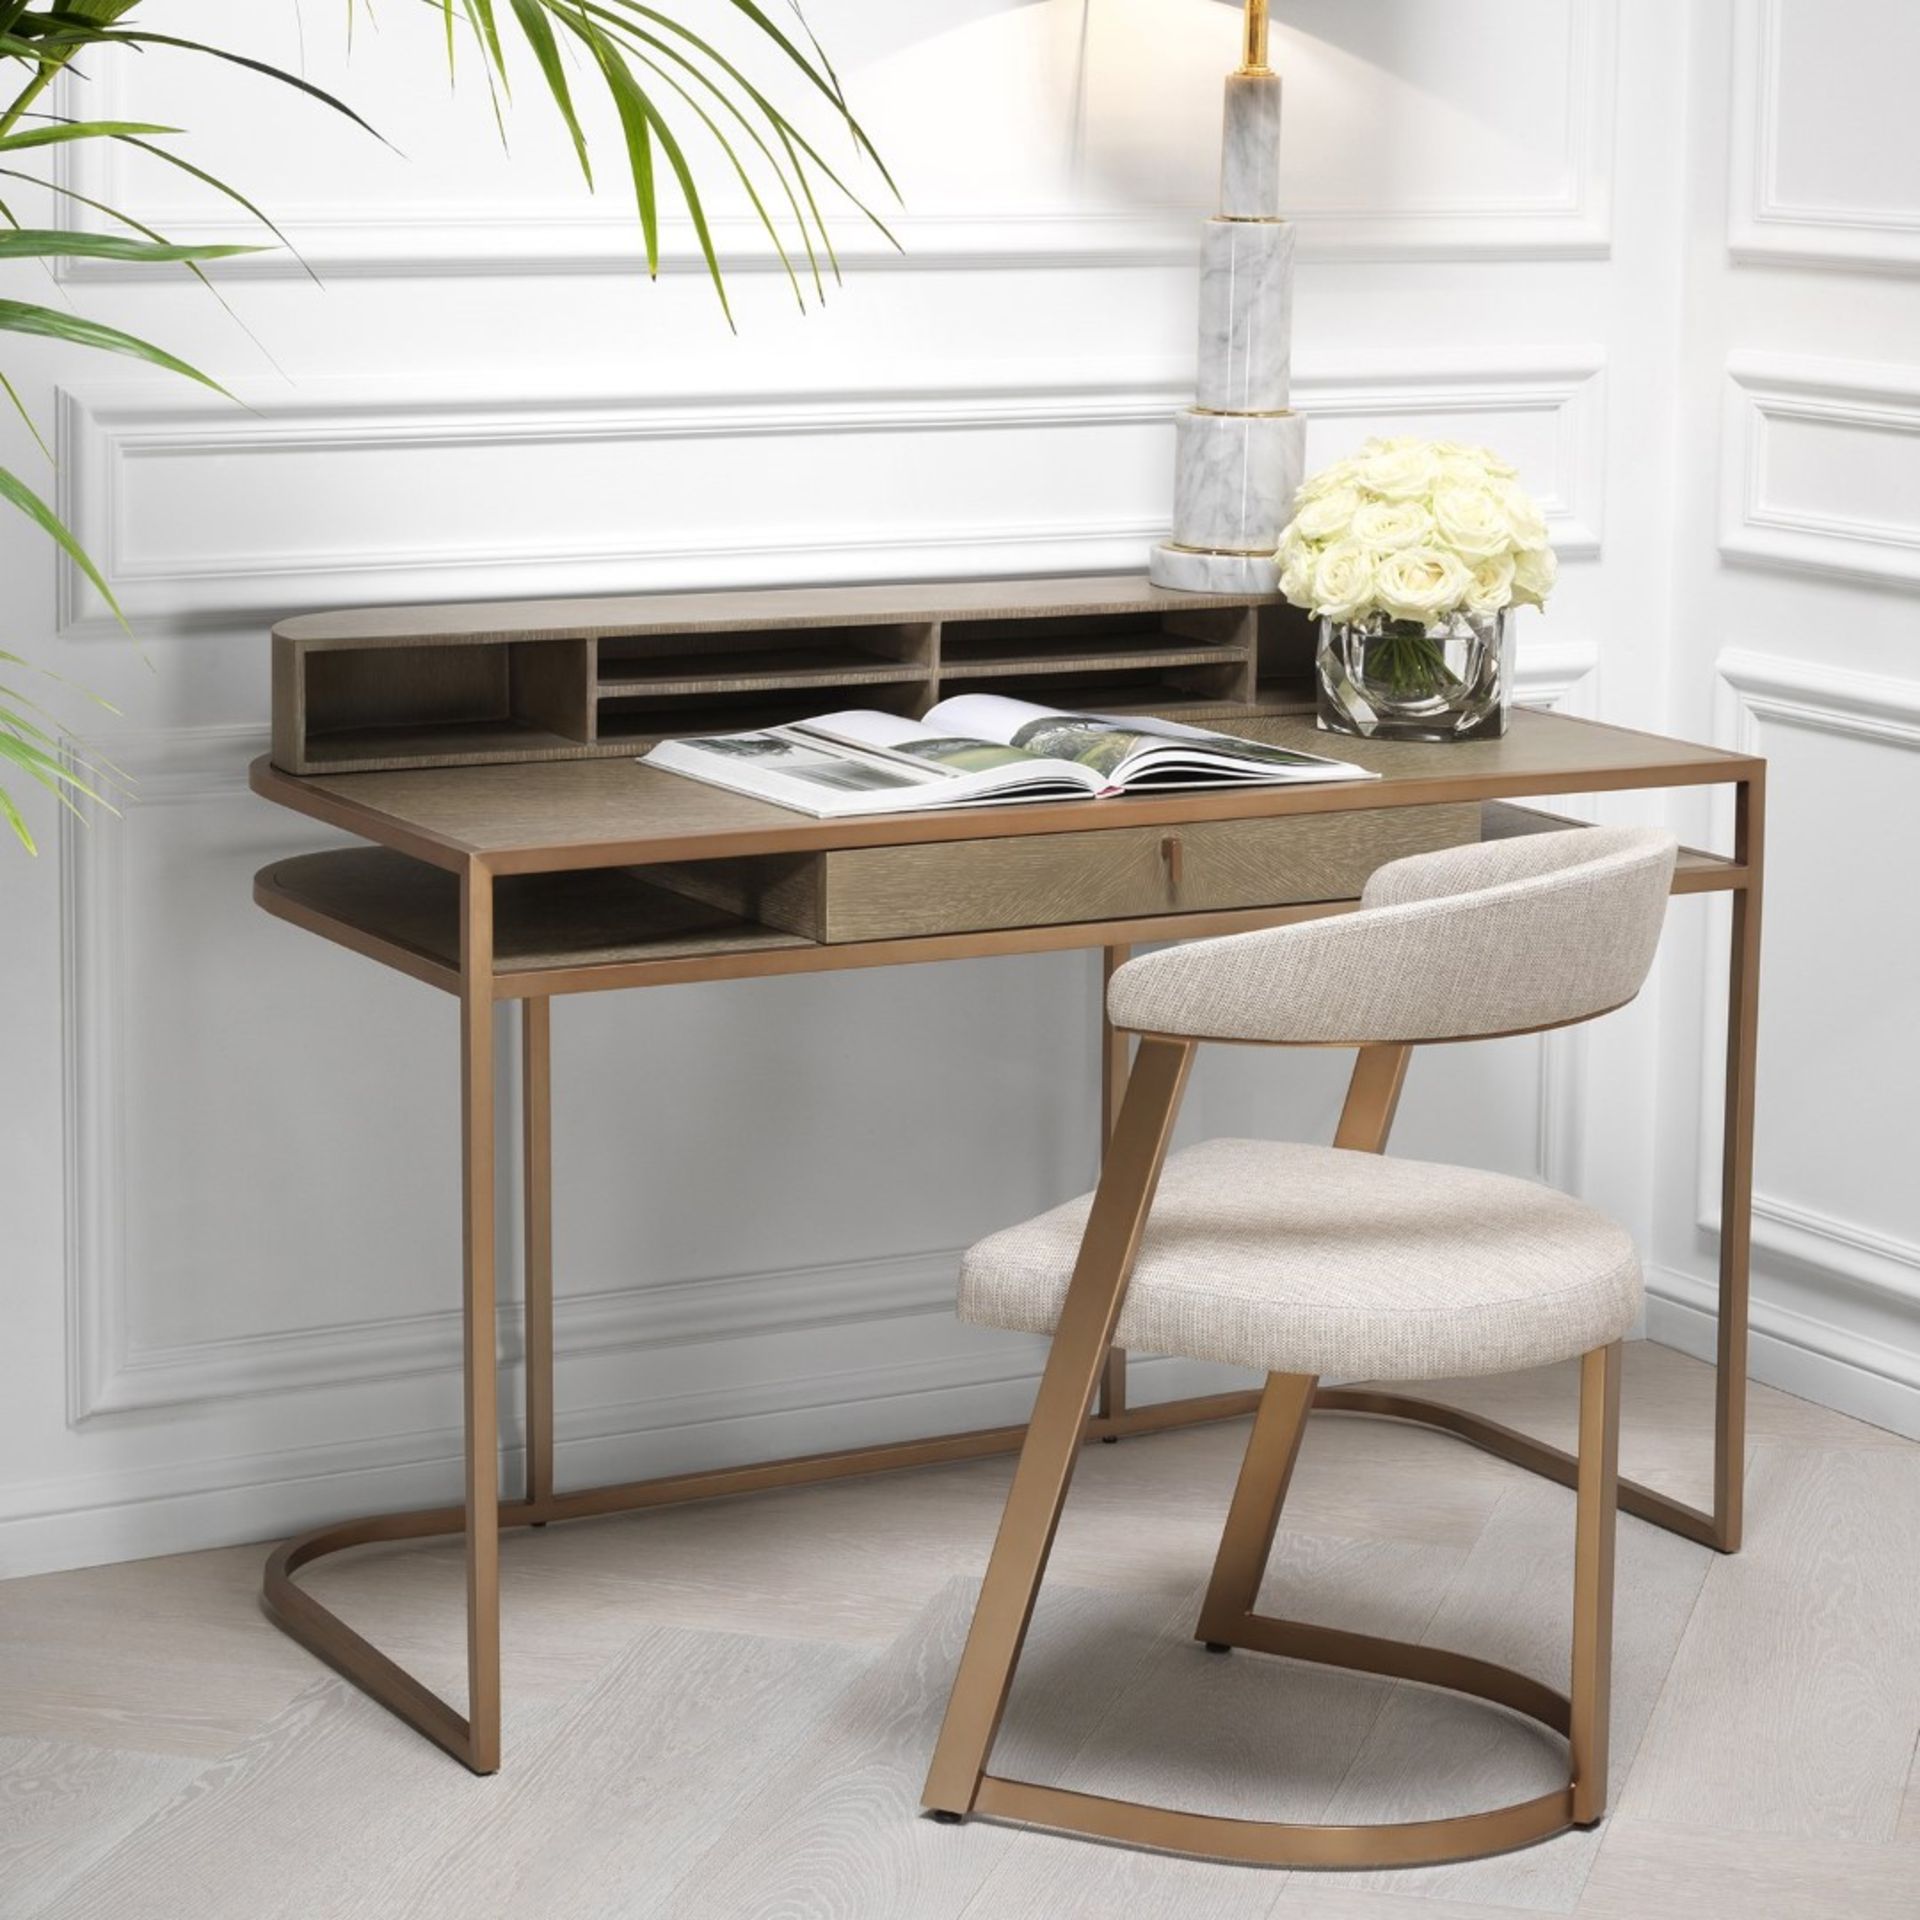 1 x EICHHOLTZ 'Highland' Designer Desk With Washed Oak And Brushed Brass Finishes - Ex-Display -